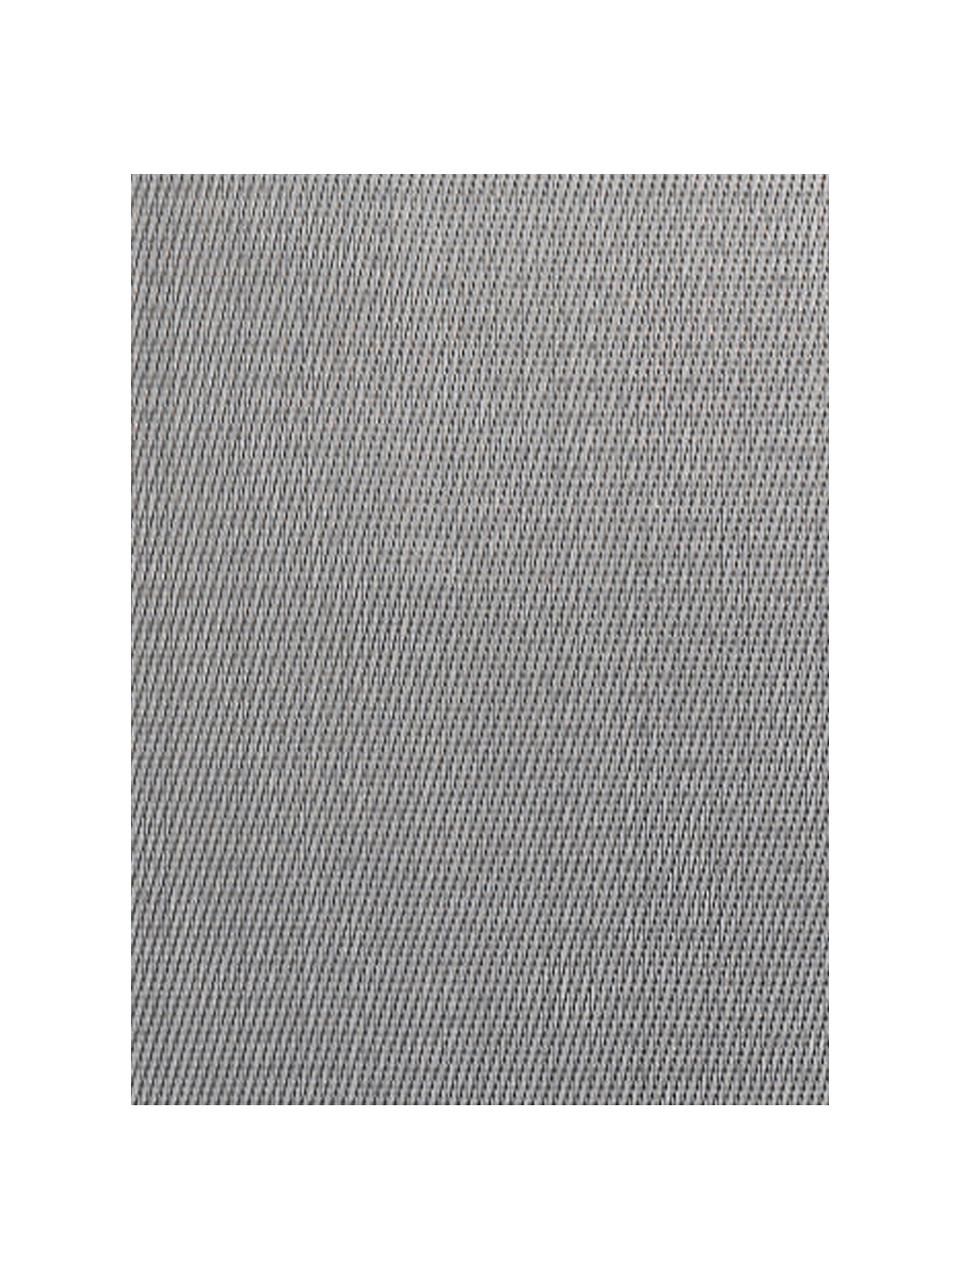 Kunststoffen placemats Trefl, 2 stuks, Kunststof (PVC), Grijs, B 33 x L 46 cm